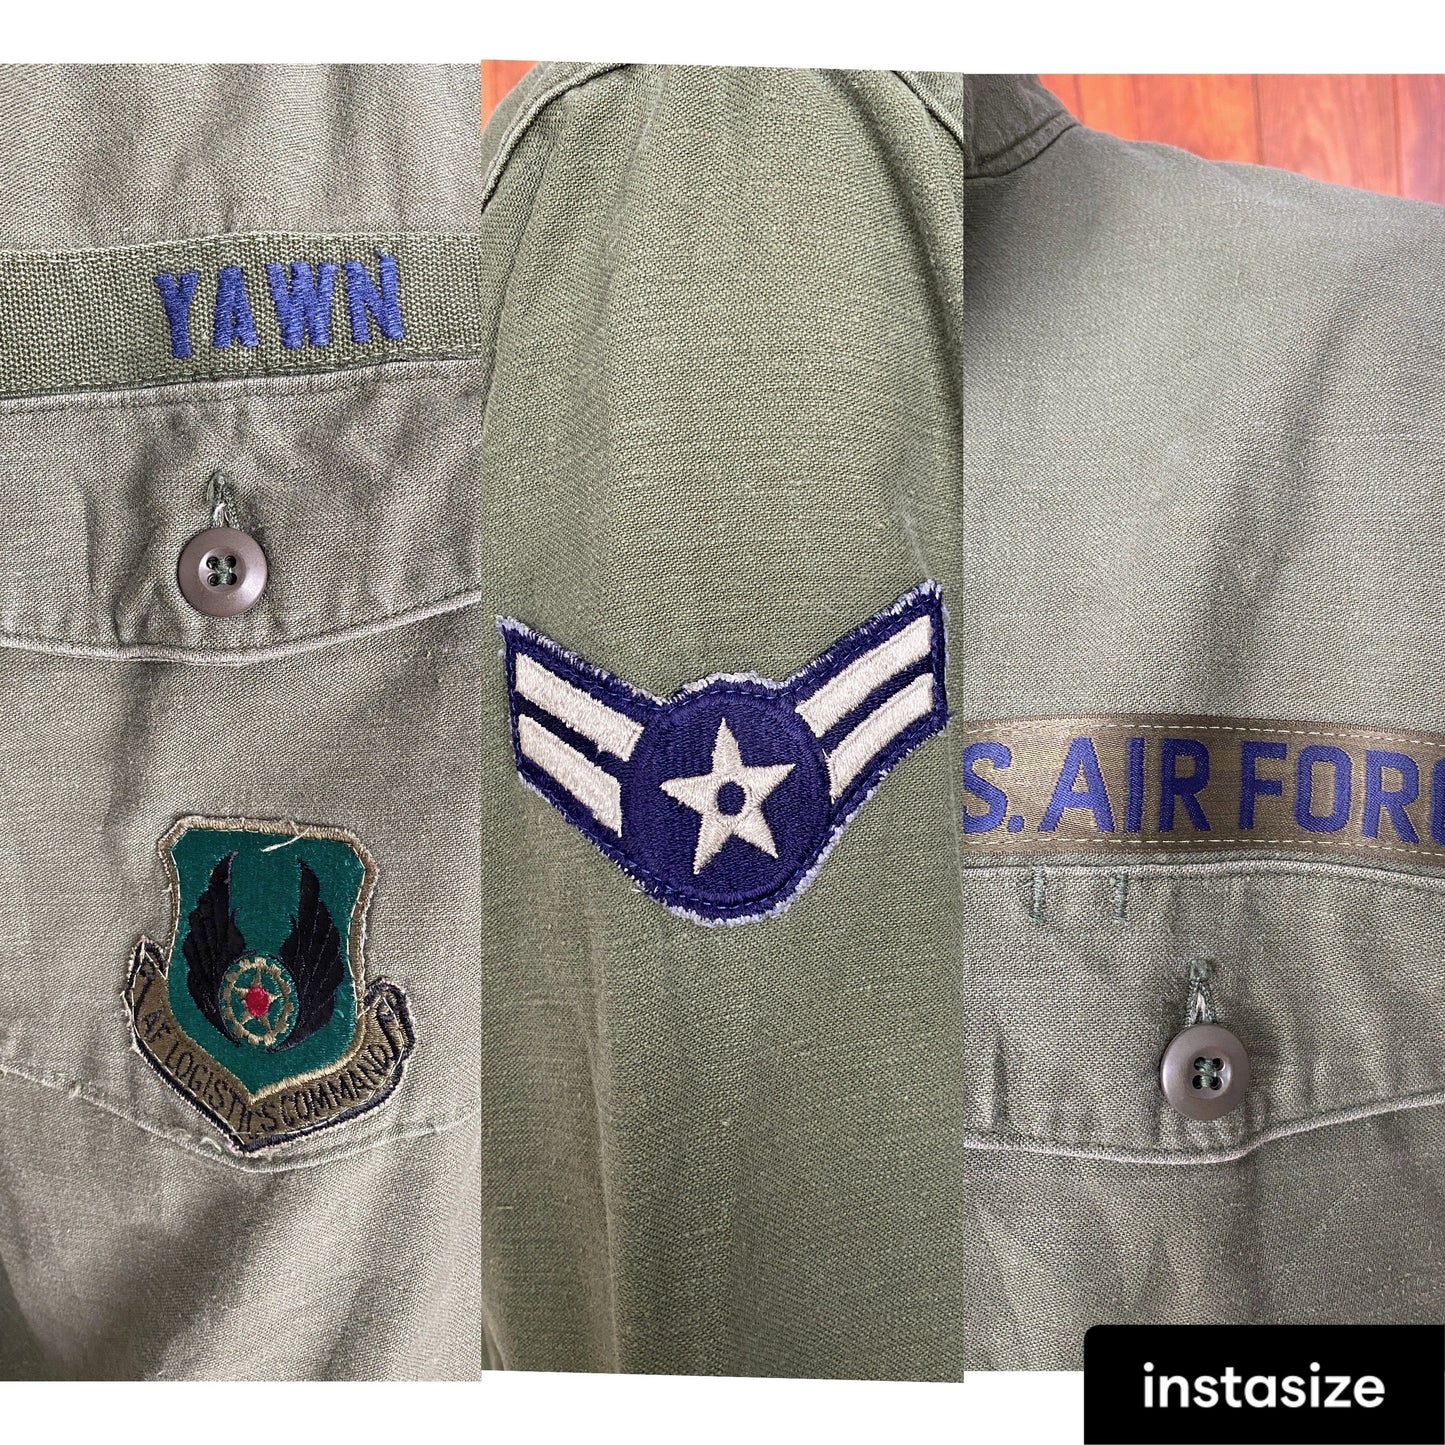 XLarge.Authentic 1975 US Army vintage Vietnam OG-107 fatigue shirt.